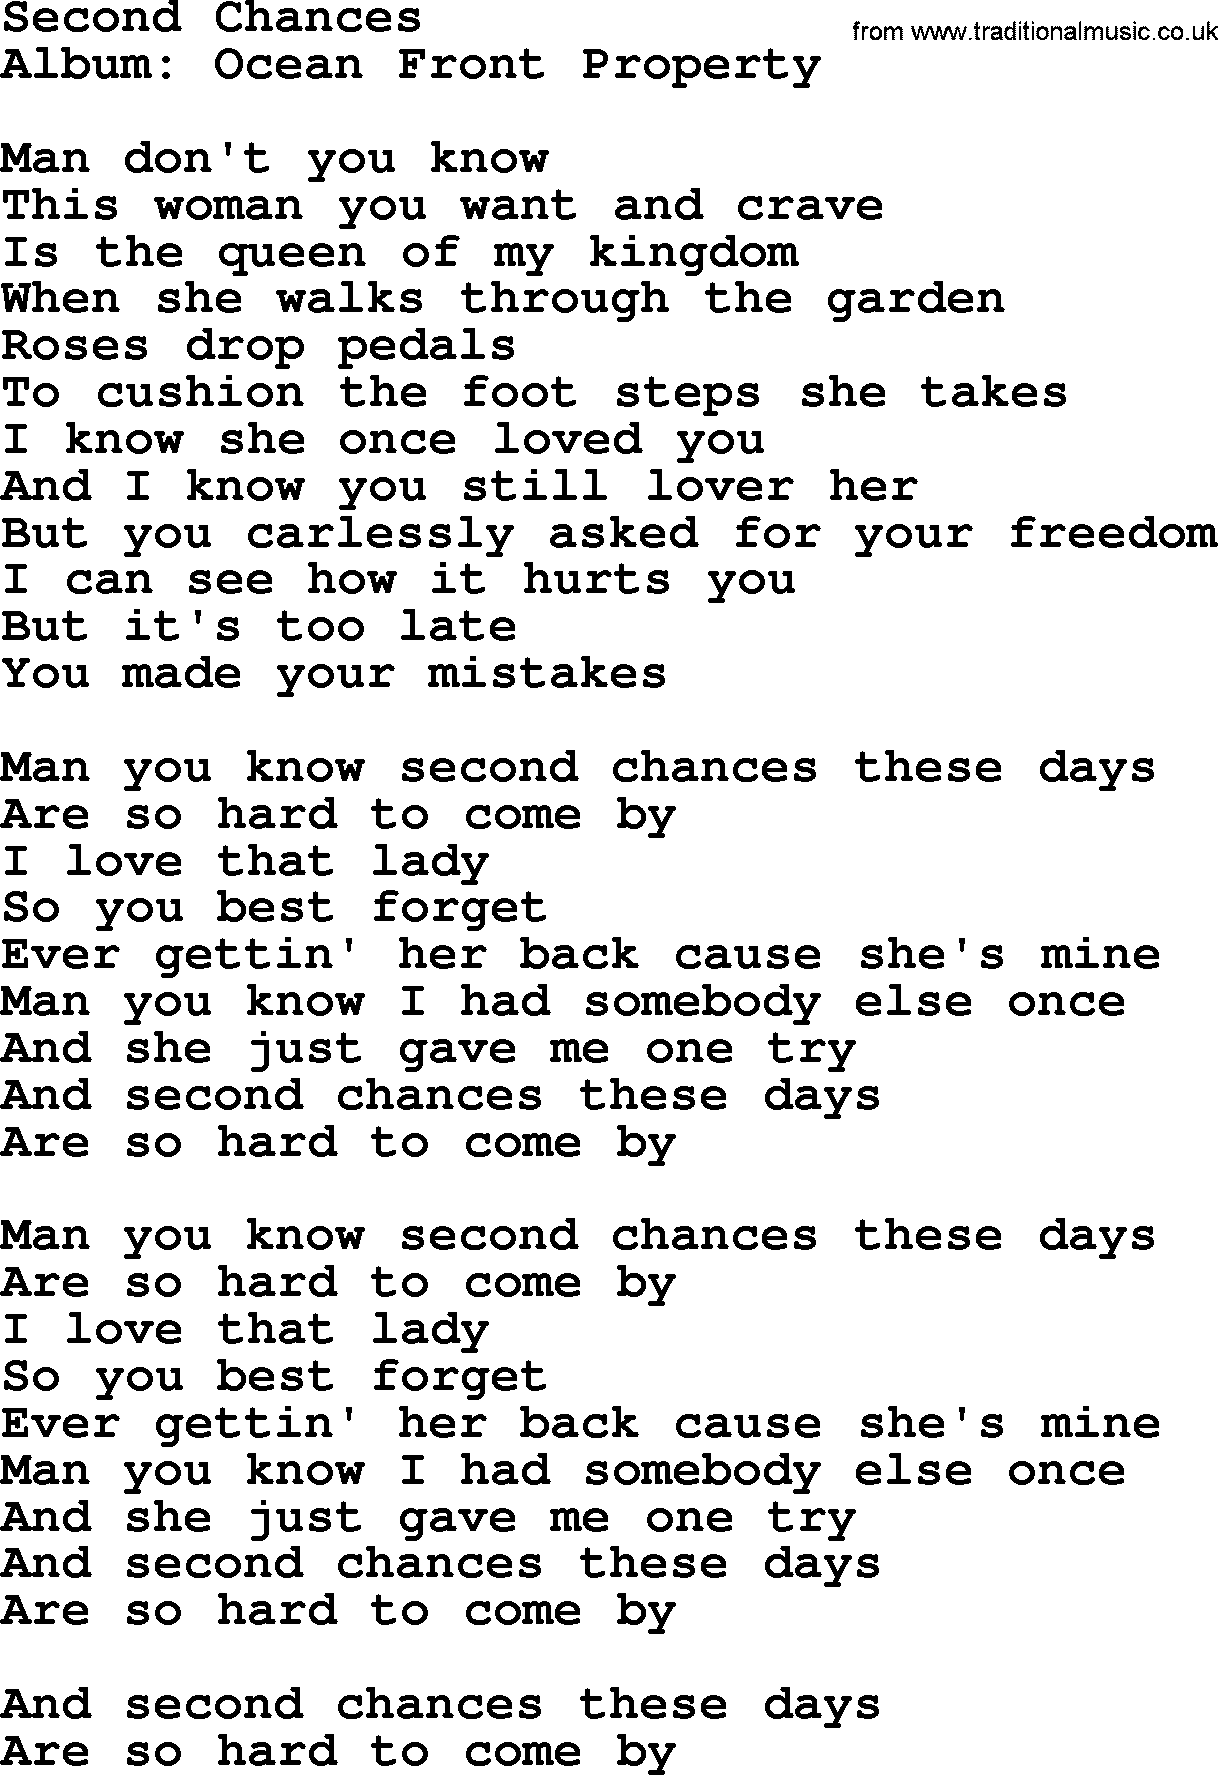 George Strait song: Second Chances, lyrics